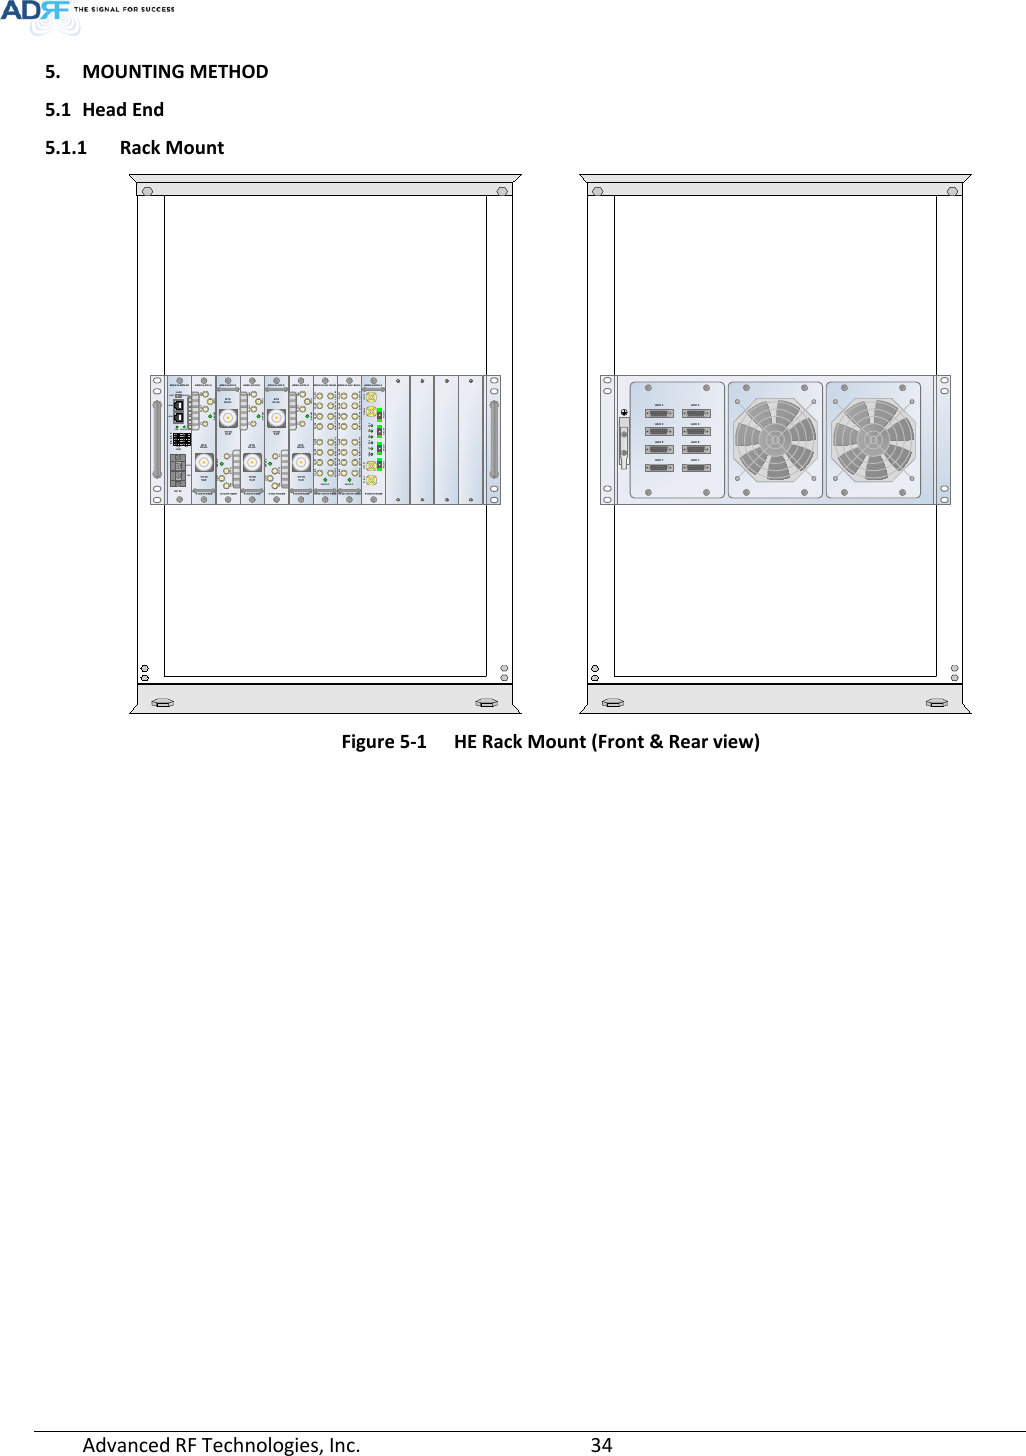 Page 34 of ADRF KOREA ADXV DAS(Distributed Antenna System) User Manual ADXV DAS